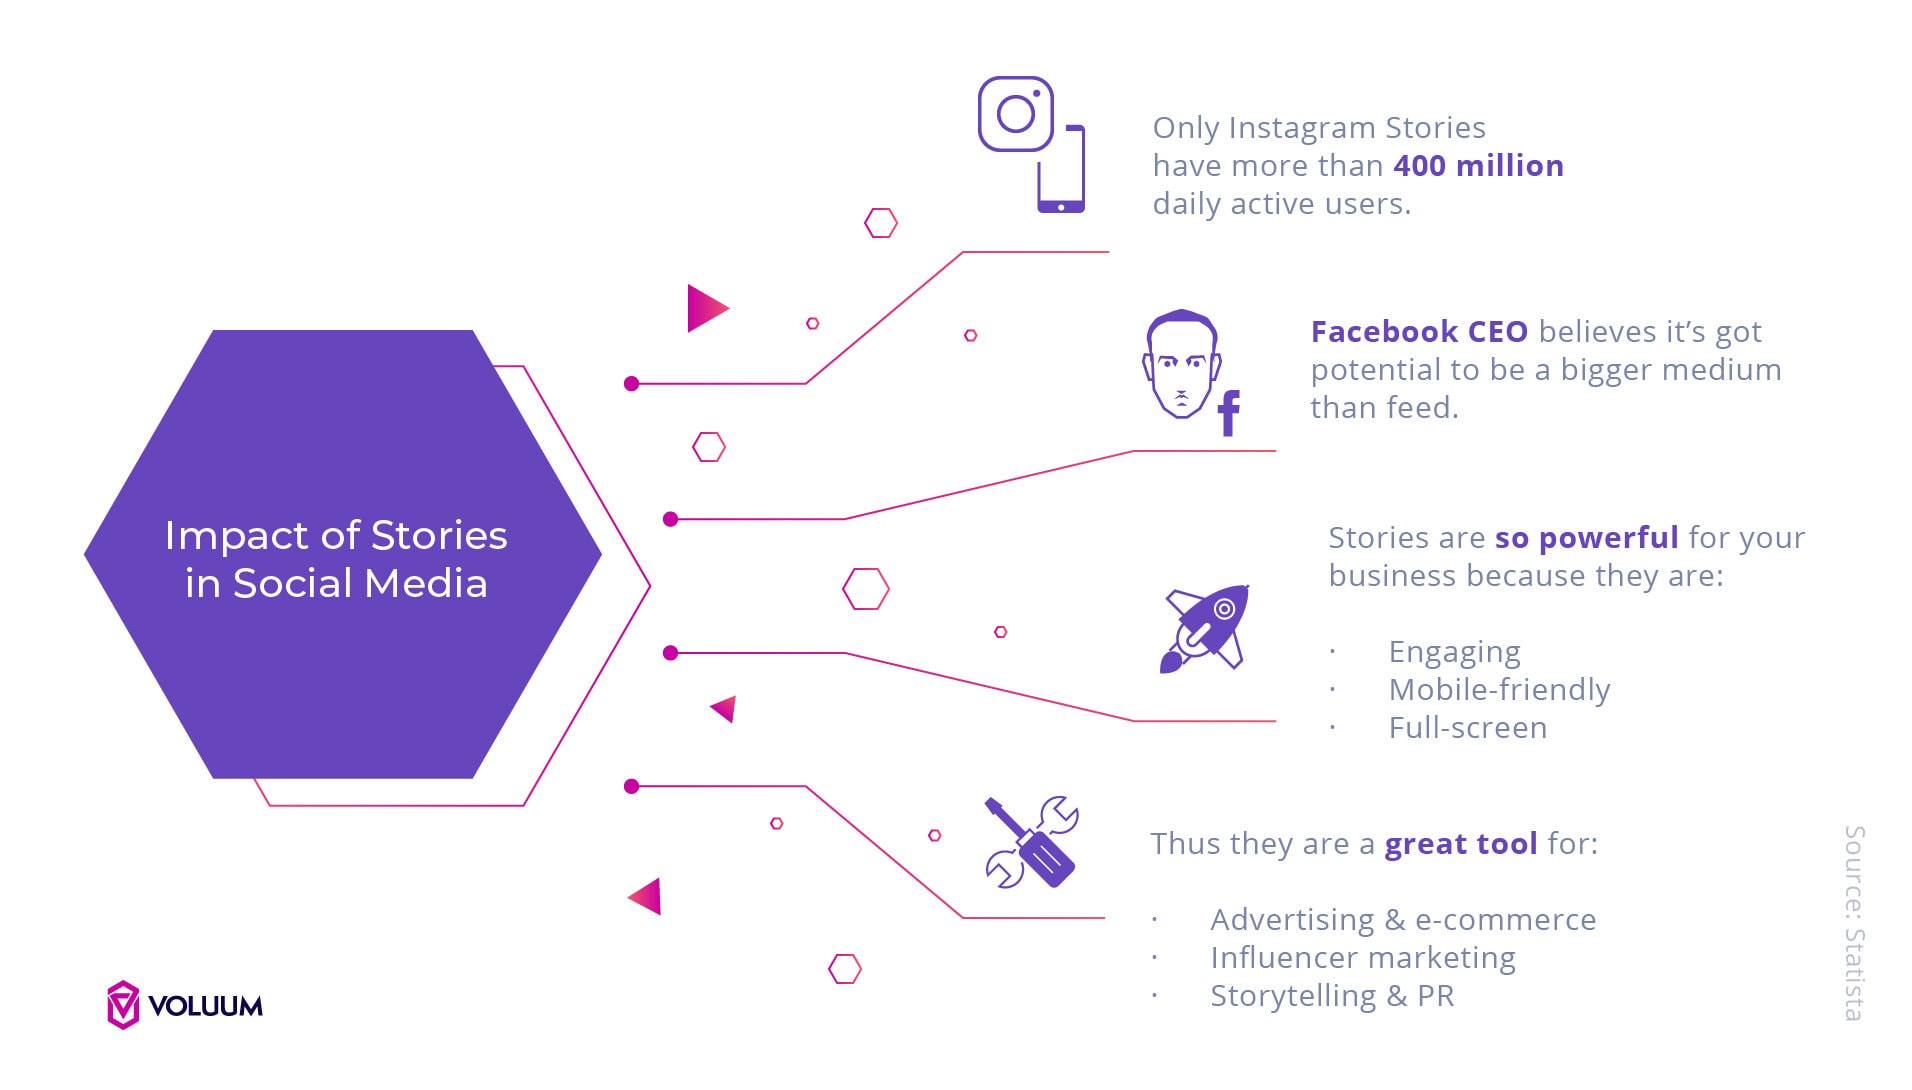 Impact of Stories in Social Media